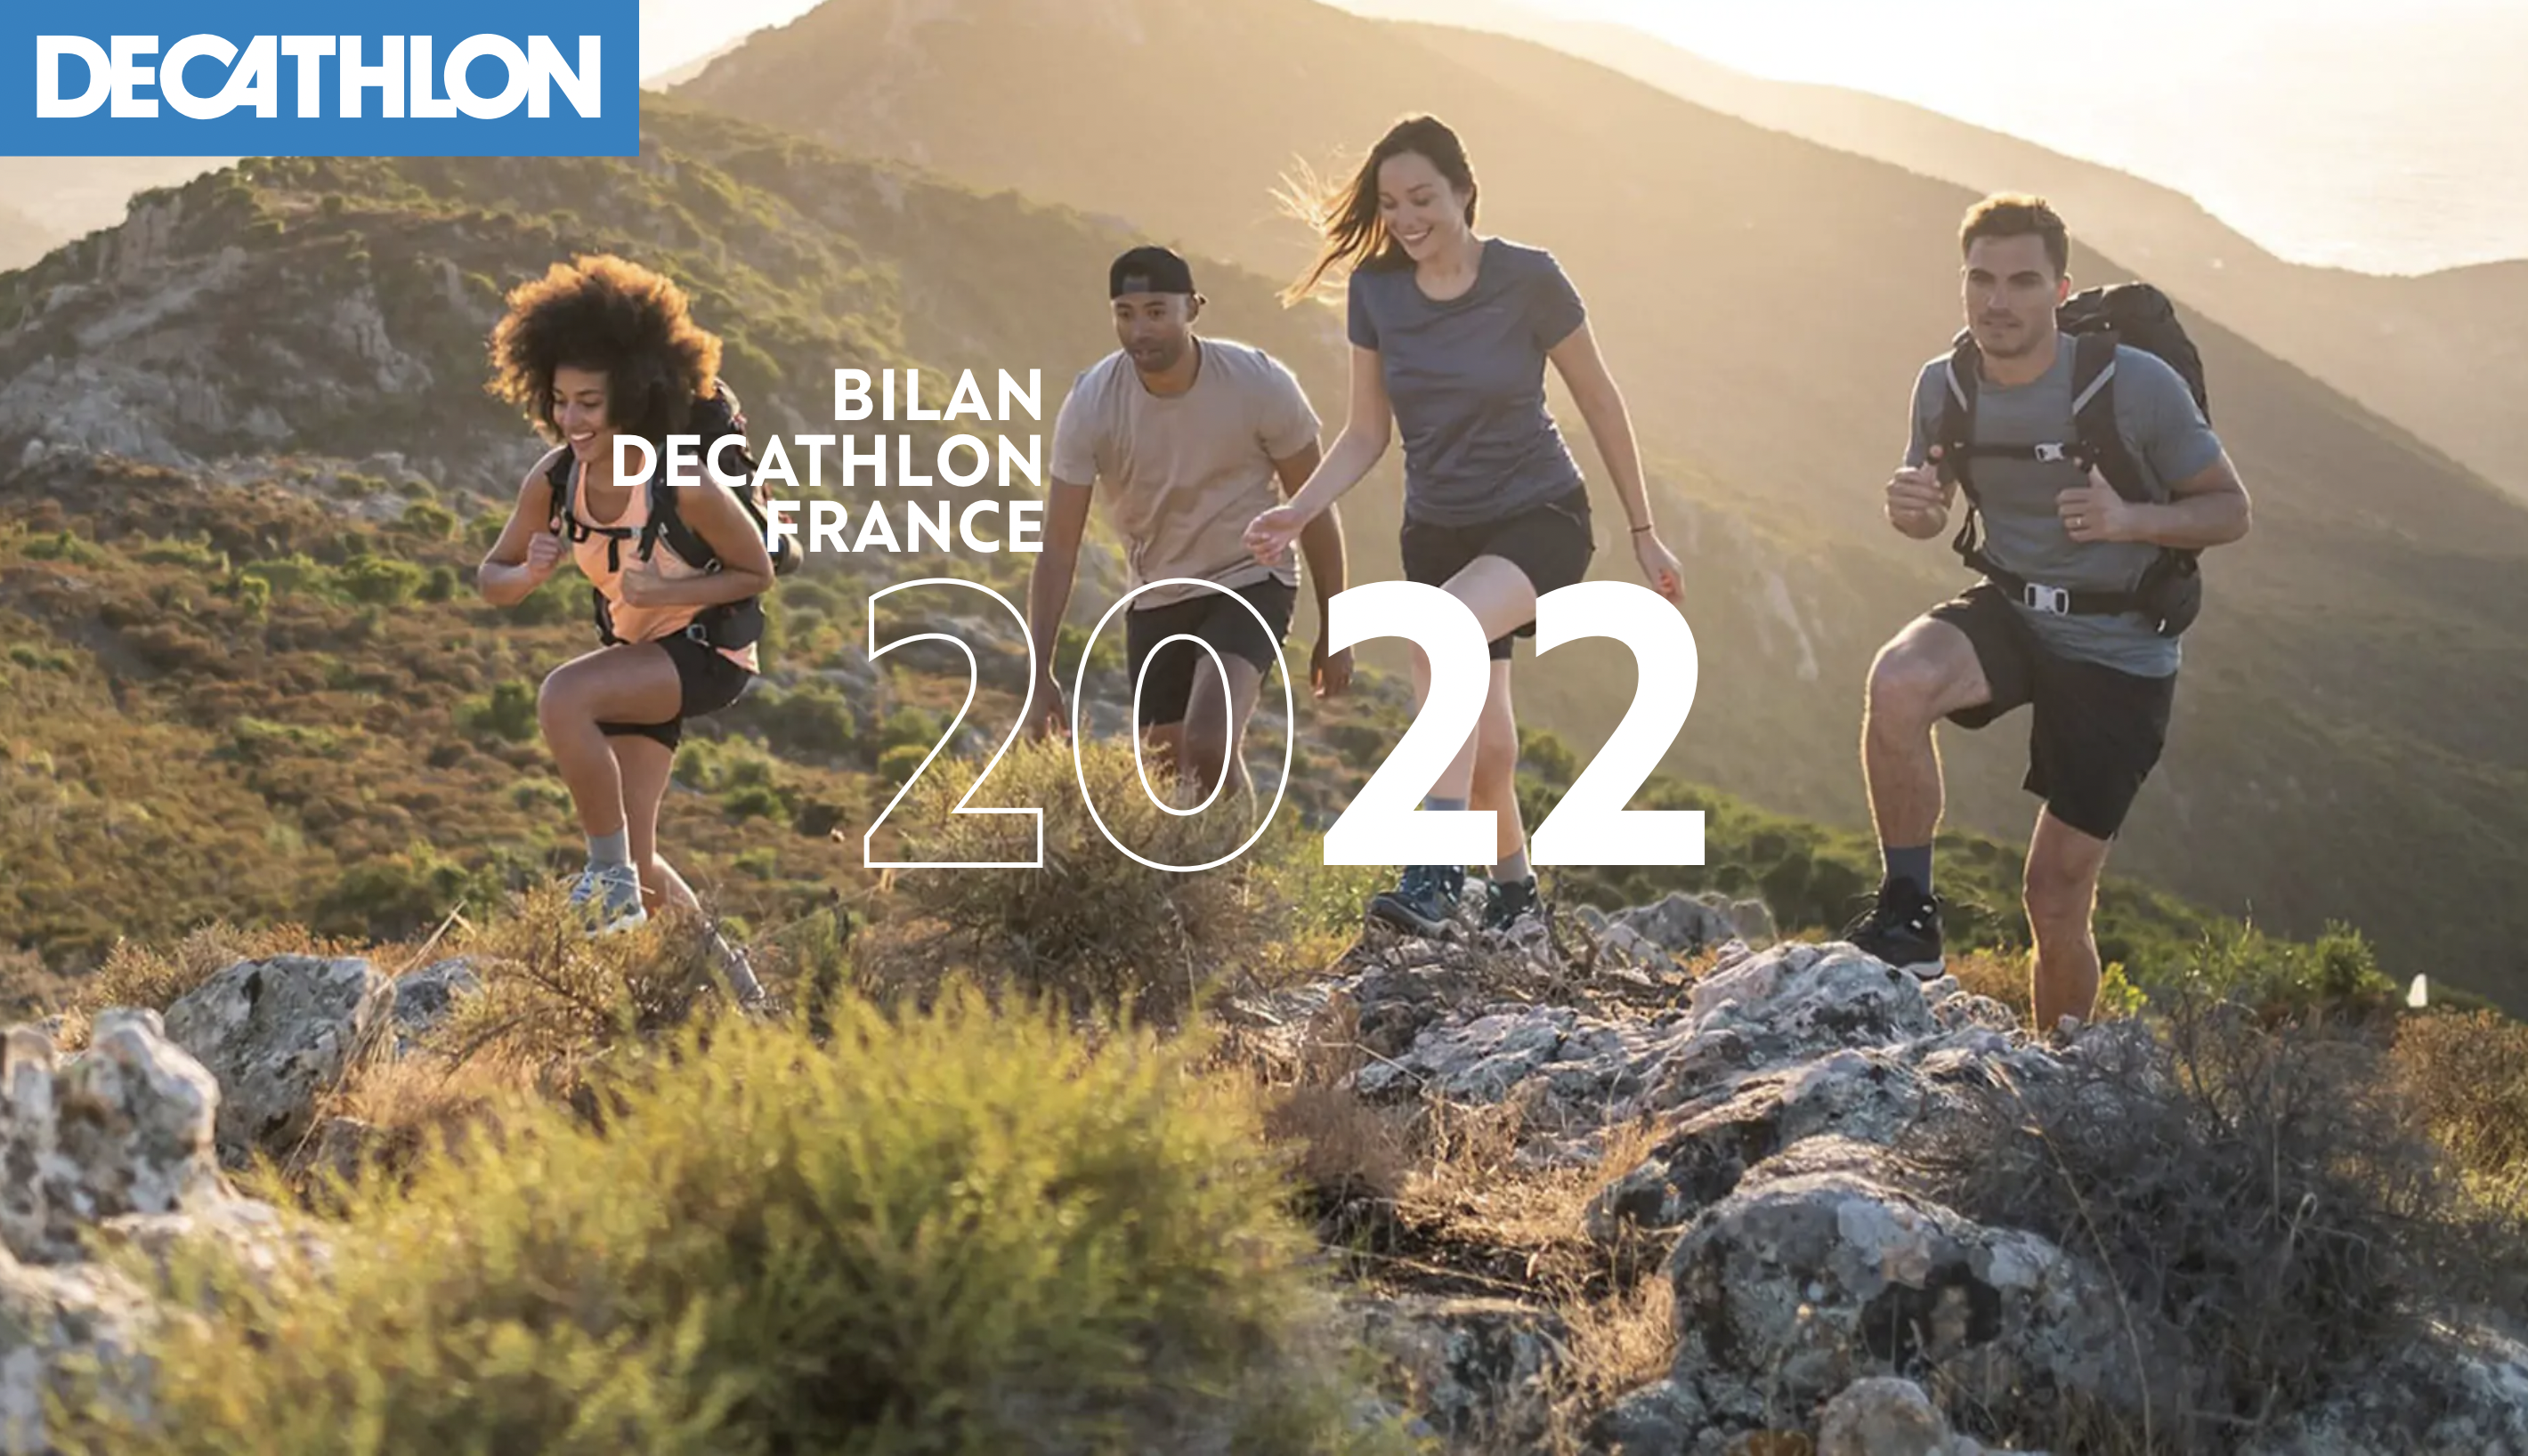 Decathlon Achieves €18.8 Billion in Sales and €923 Million in Net Profit in 2022